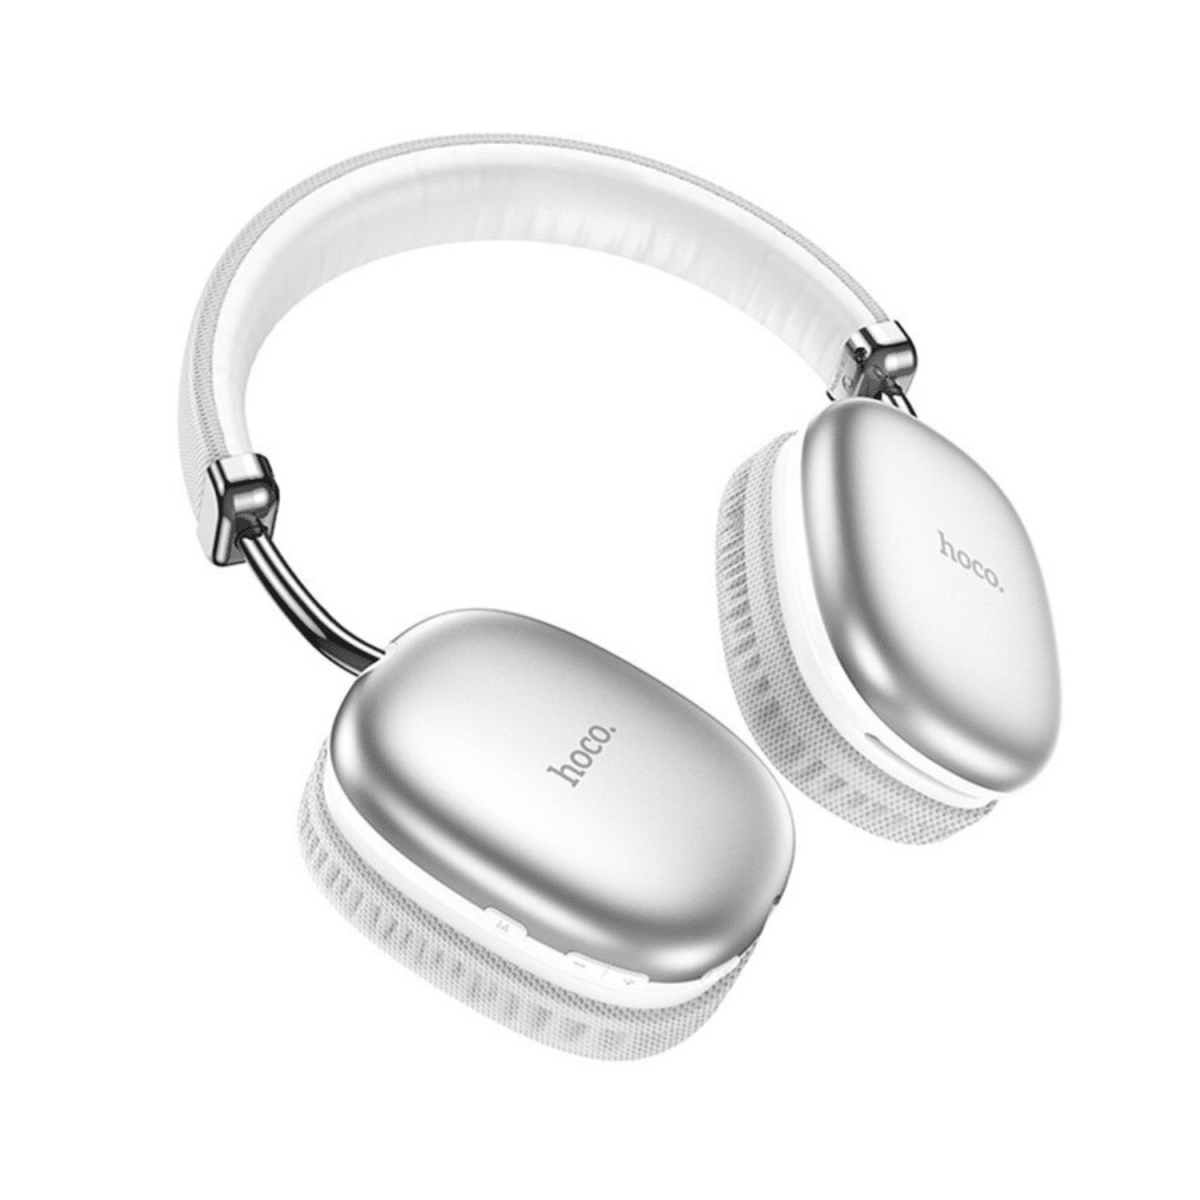 Audifonos Inalambricos Hoco W35 Bluetooth Diadema Over Ear